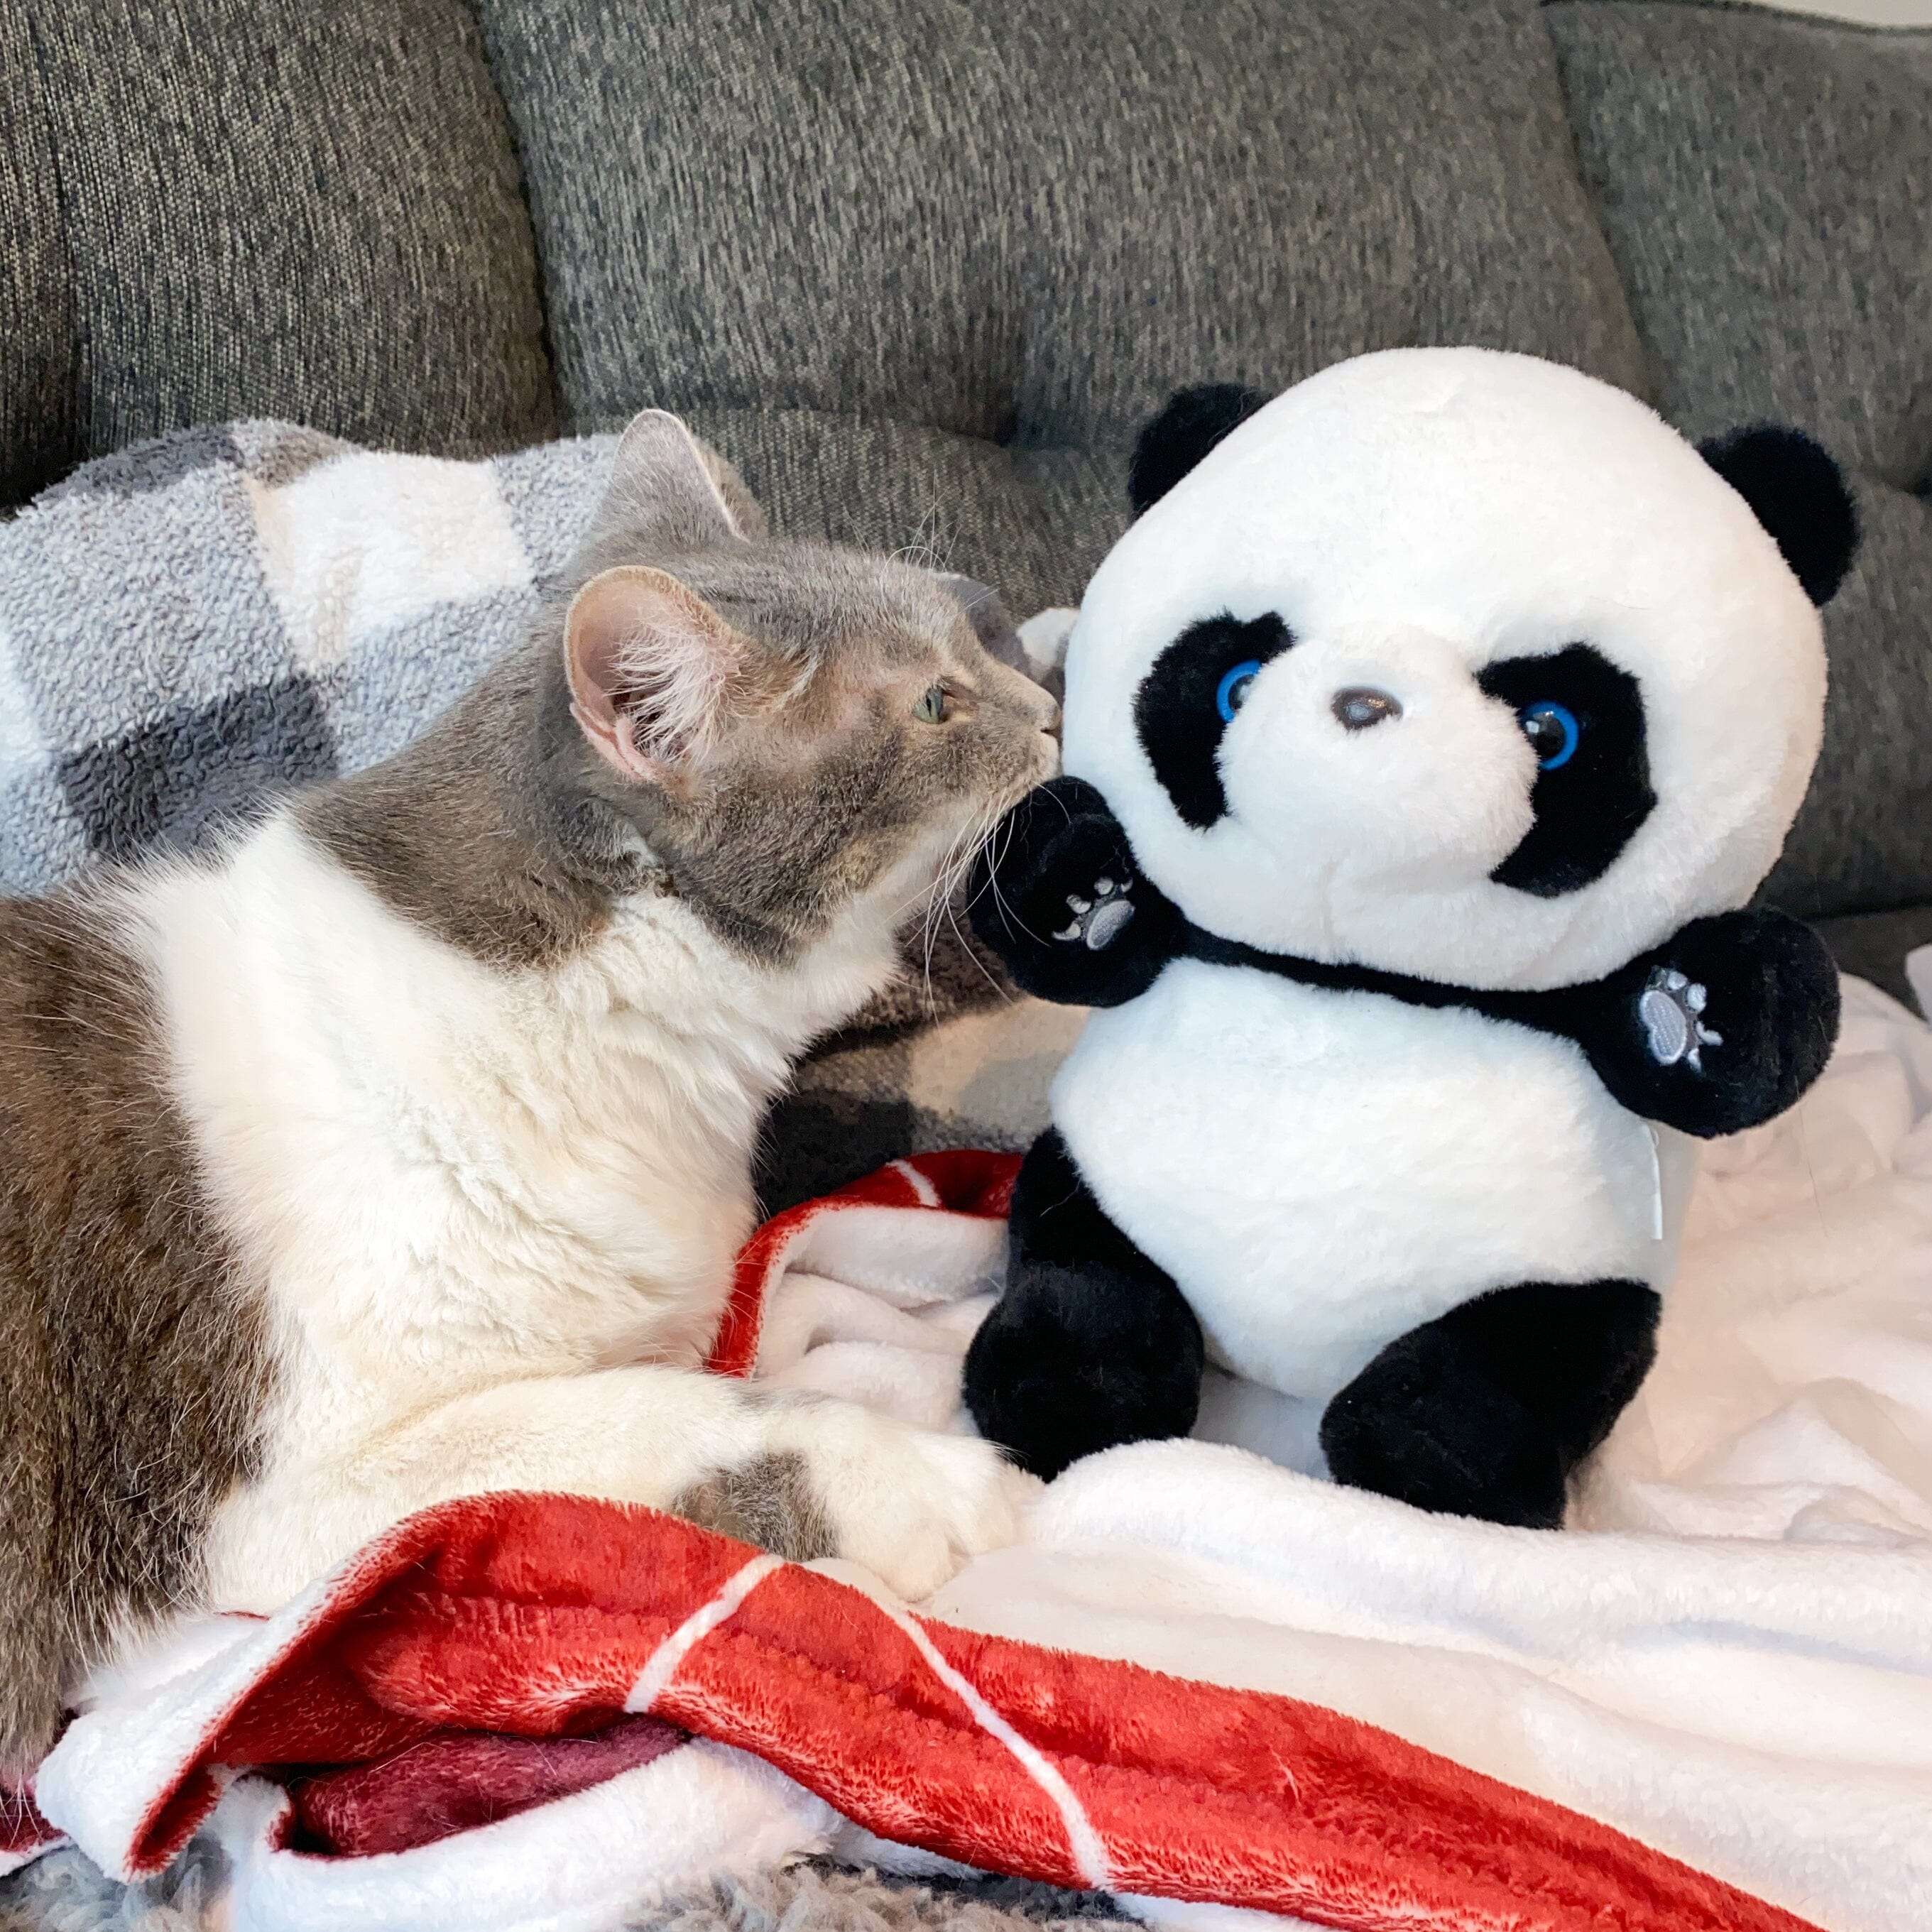 Cuddly Panda Plush The Autistic Innovator 